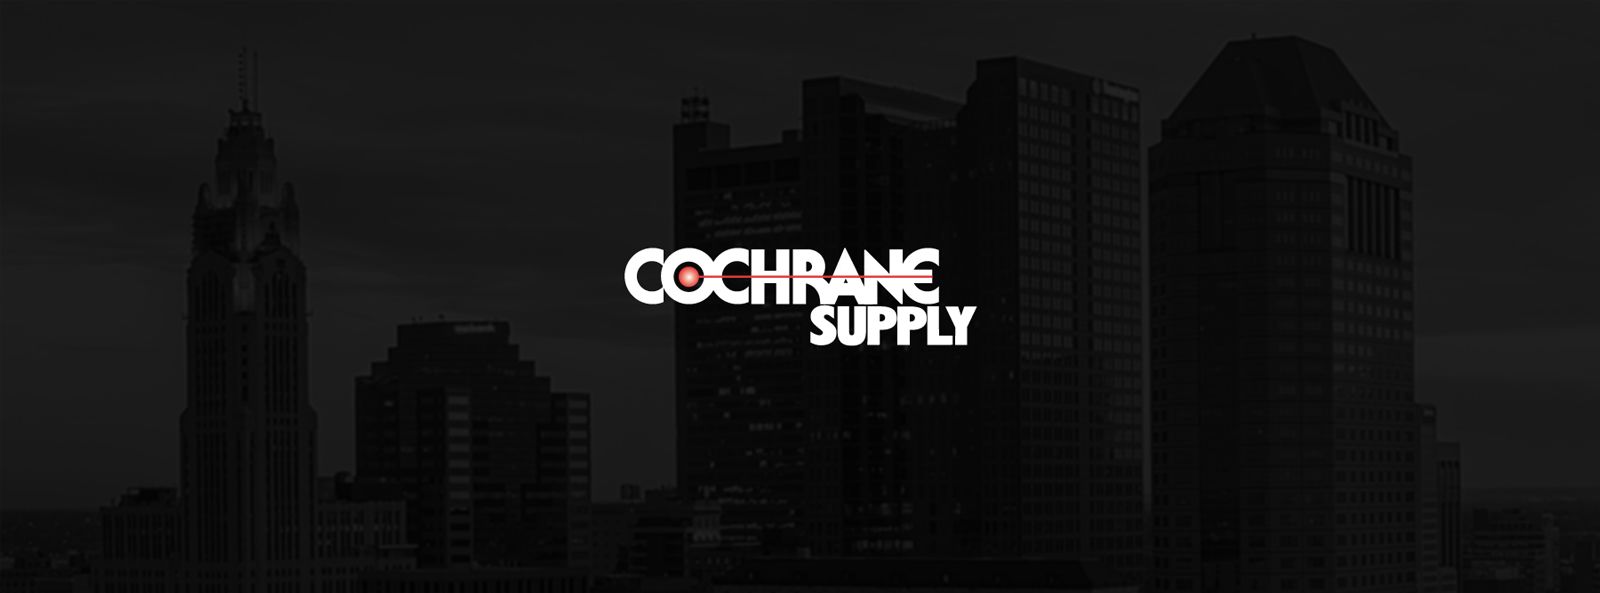 Welcome Cochrane Supply!